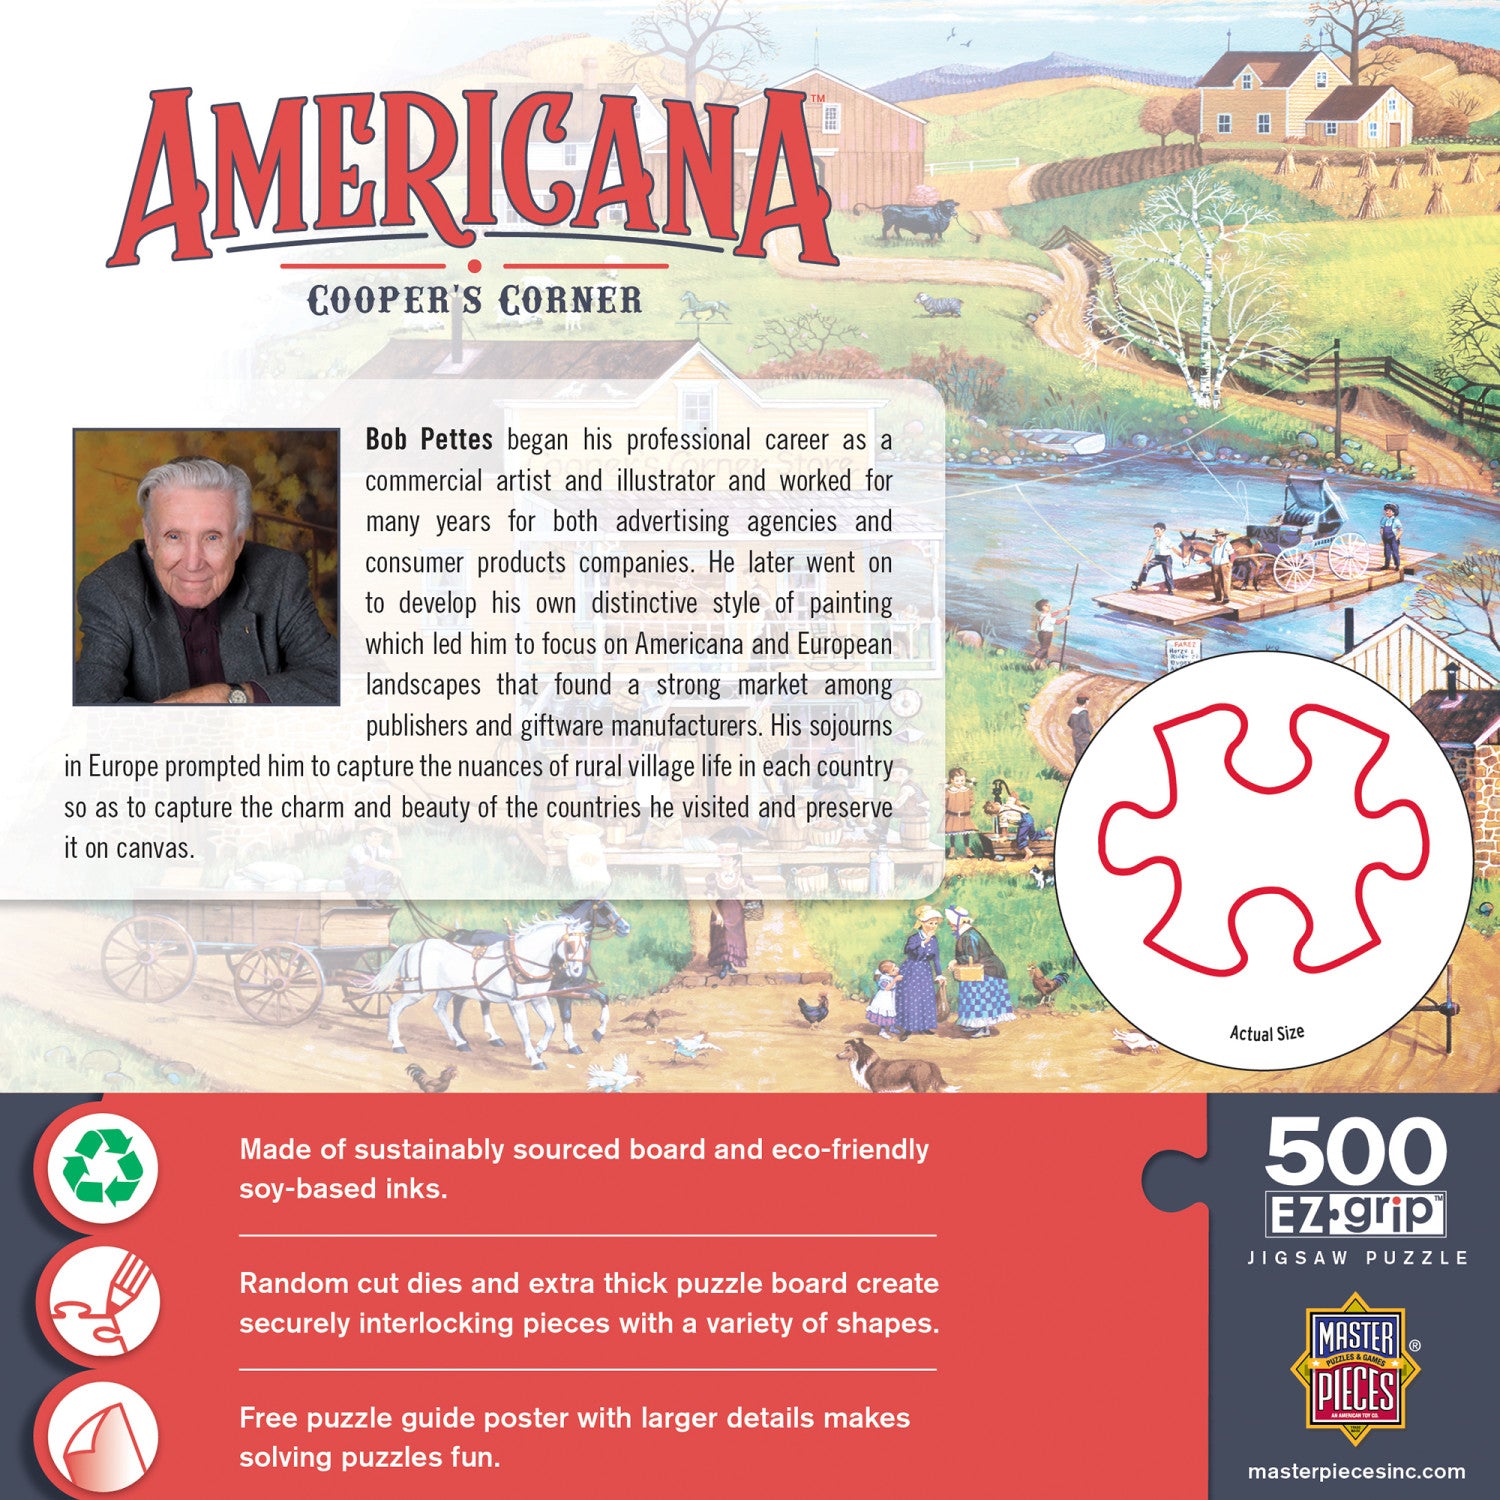 Americana - Cooper's Corner 500 Piece EZ Grip Jigsaw Puzzle